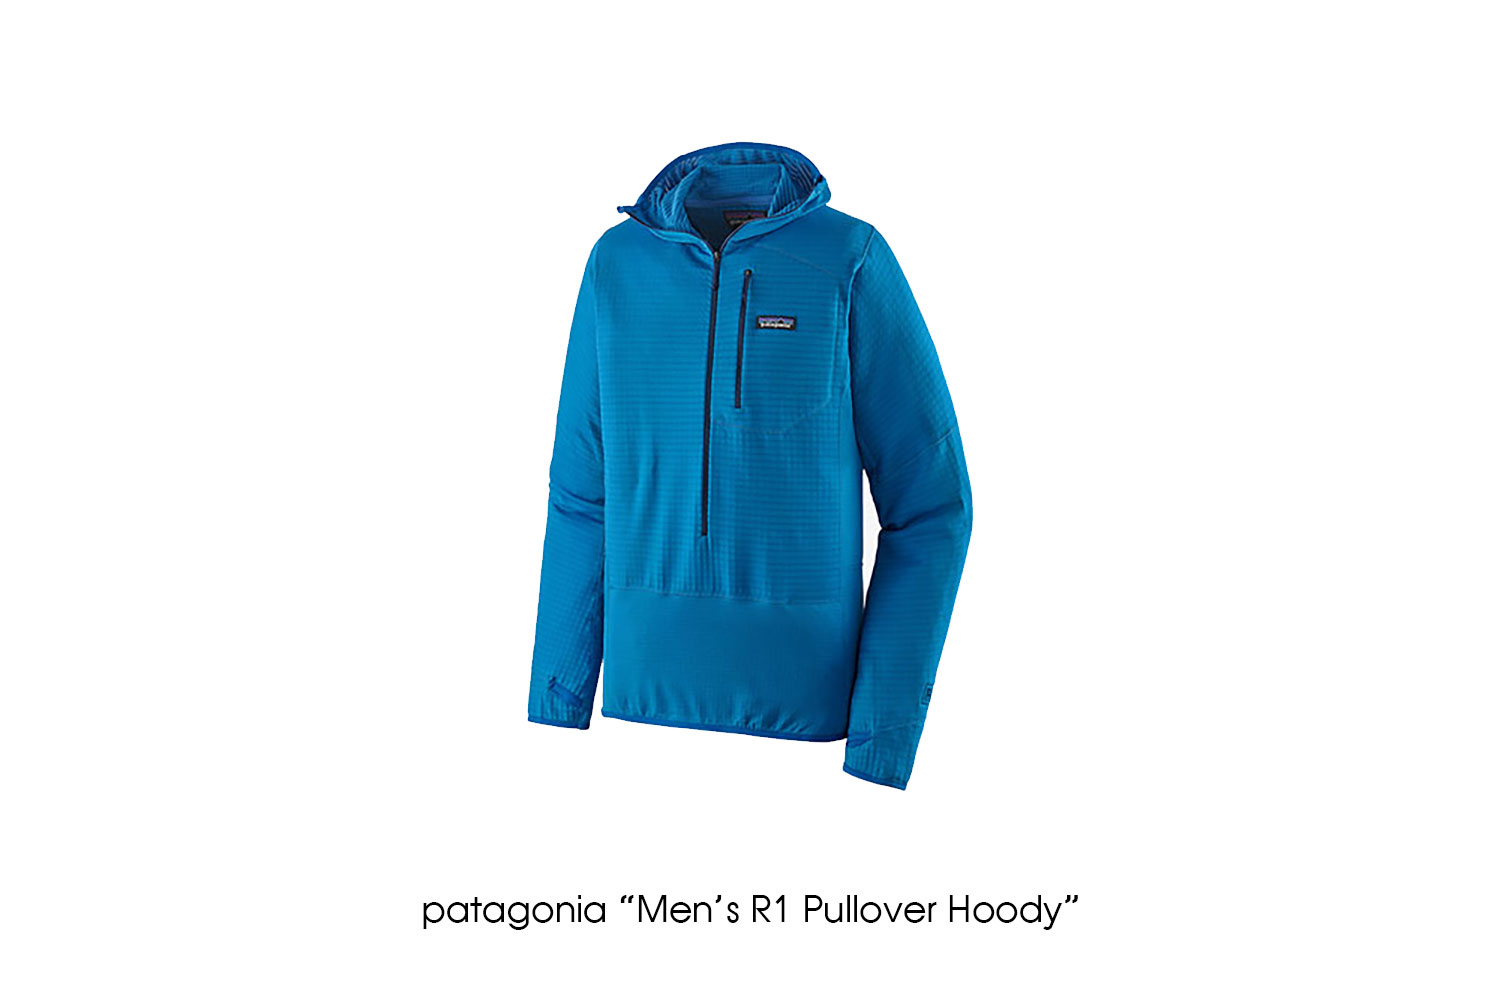 patagonia "Men's R1 Pullover Hoody"